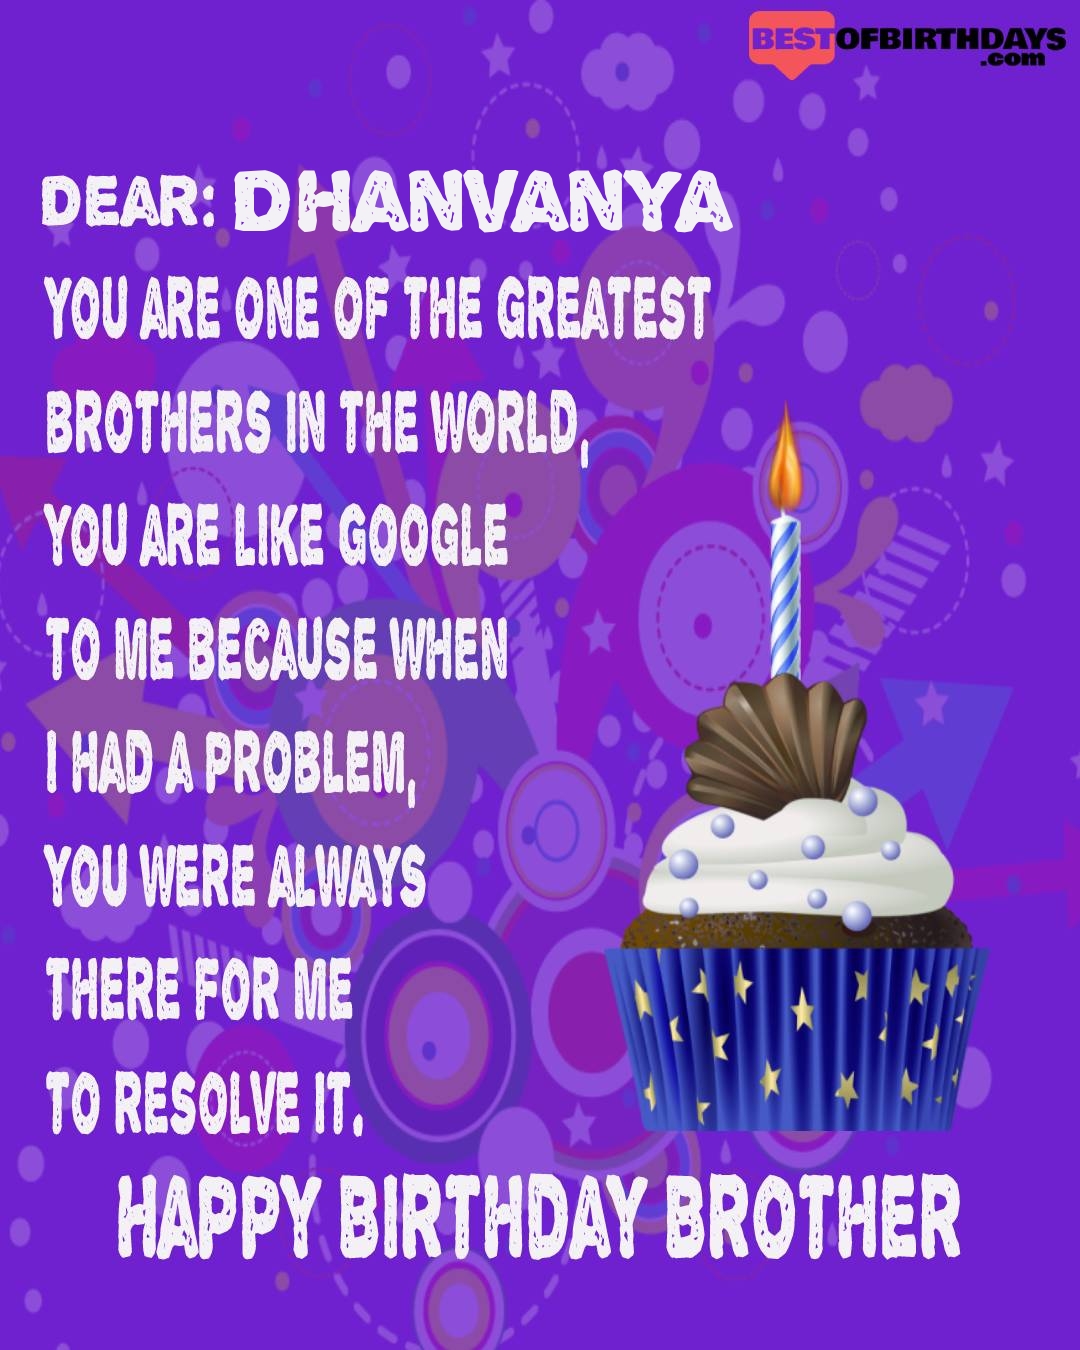 Happy birthday dhanvanya bhai brother bro